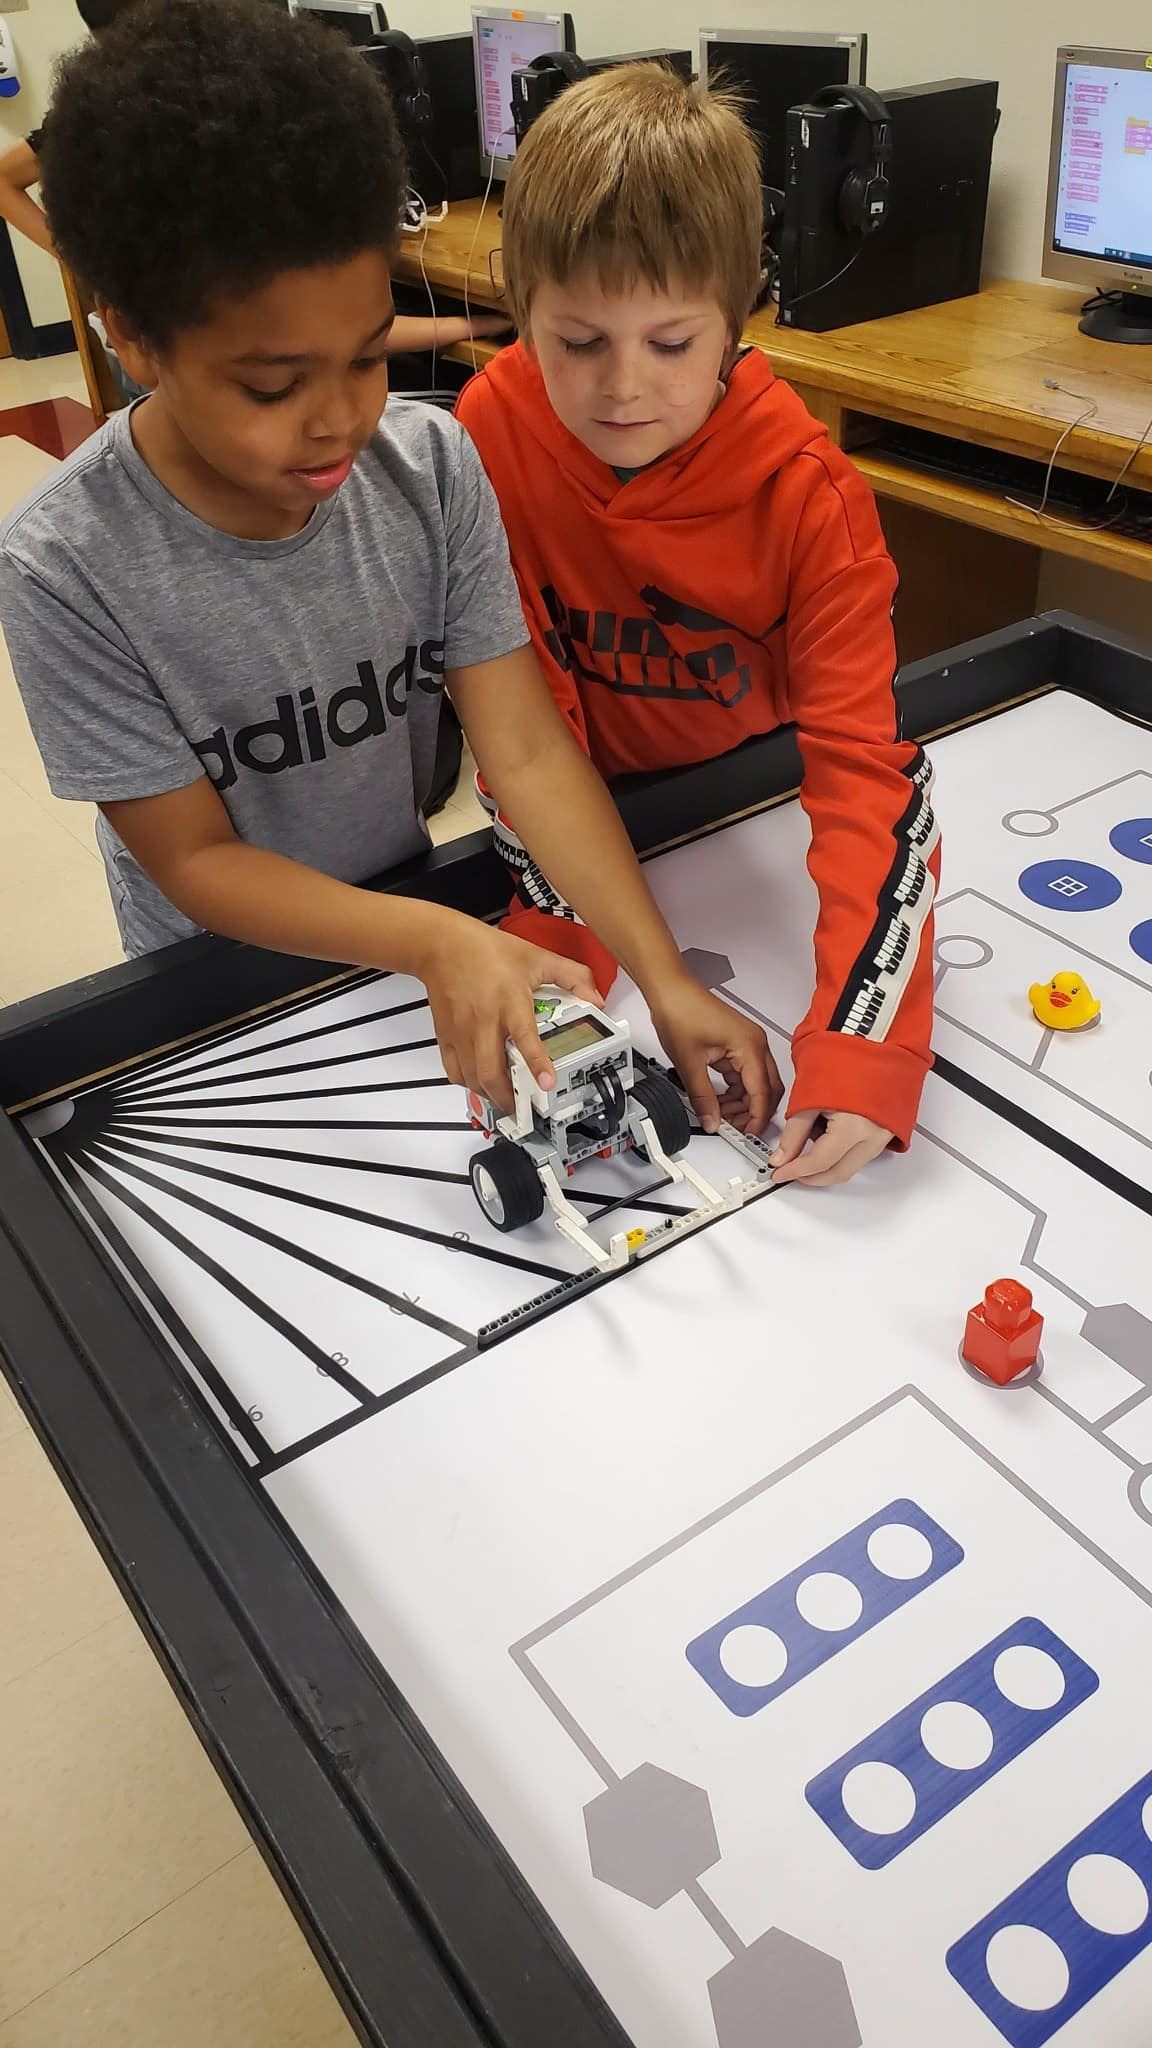  boys working on robotics